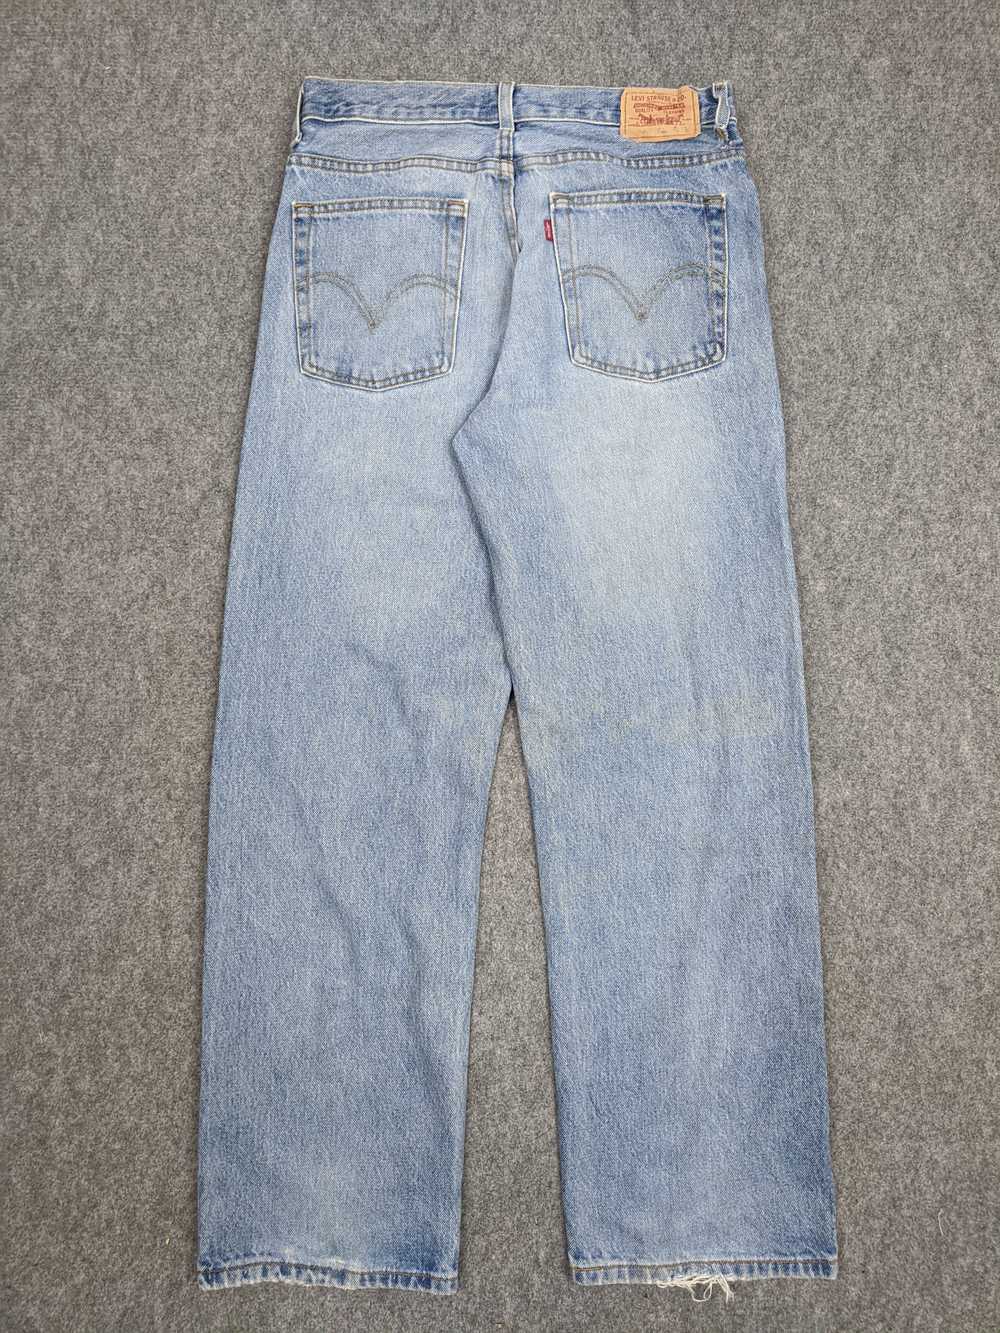 Vintage - Vintage Levis 569 Jeans - image 3